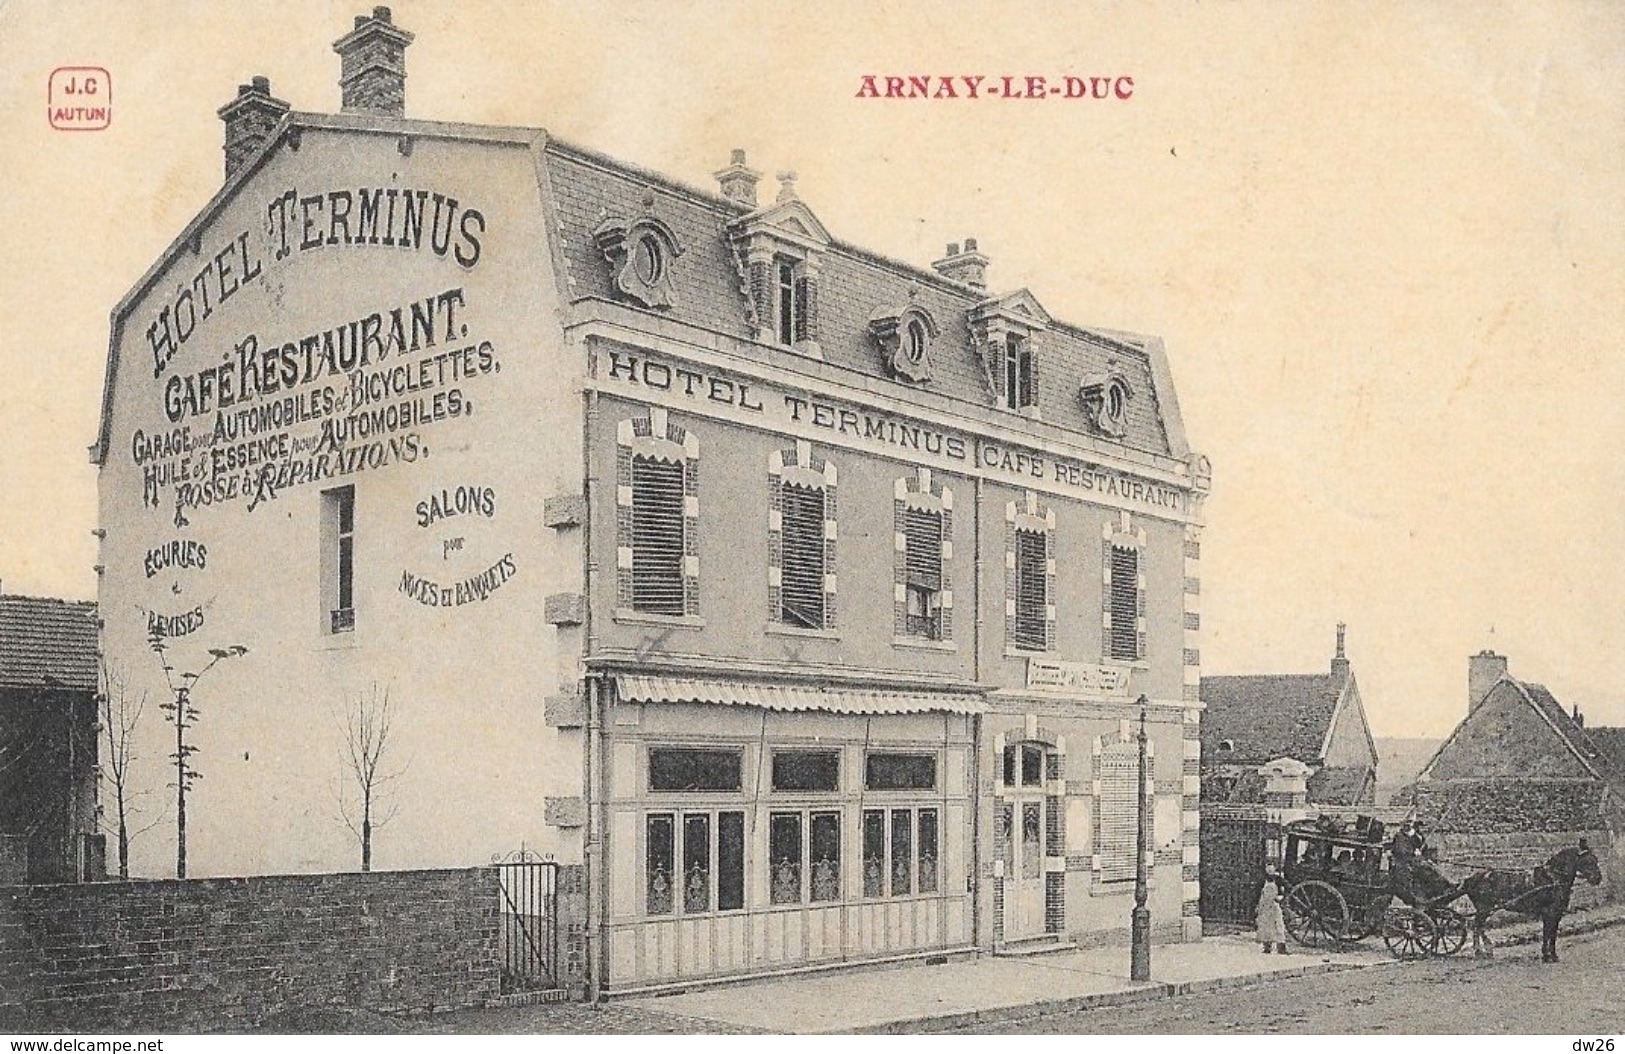 Arnay-le-Duc - Hôtel Terminus, Café-Restaurant - Carte J.C. Animée (attelage) - Alberghi & Ristoranti